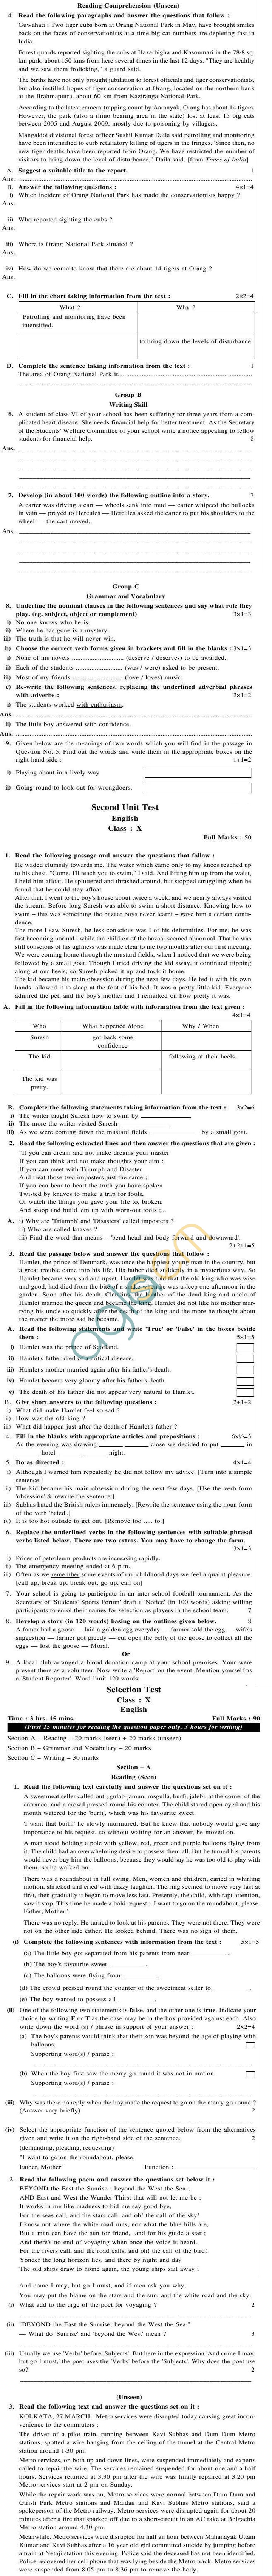 WB Board Sample Question Papers for Madhyamik Pariksha (Class 10) - English